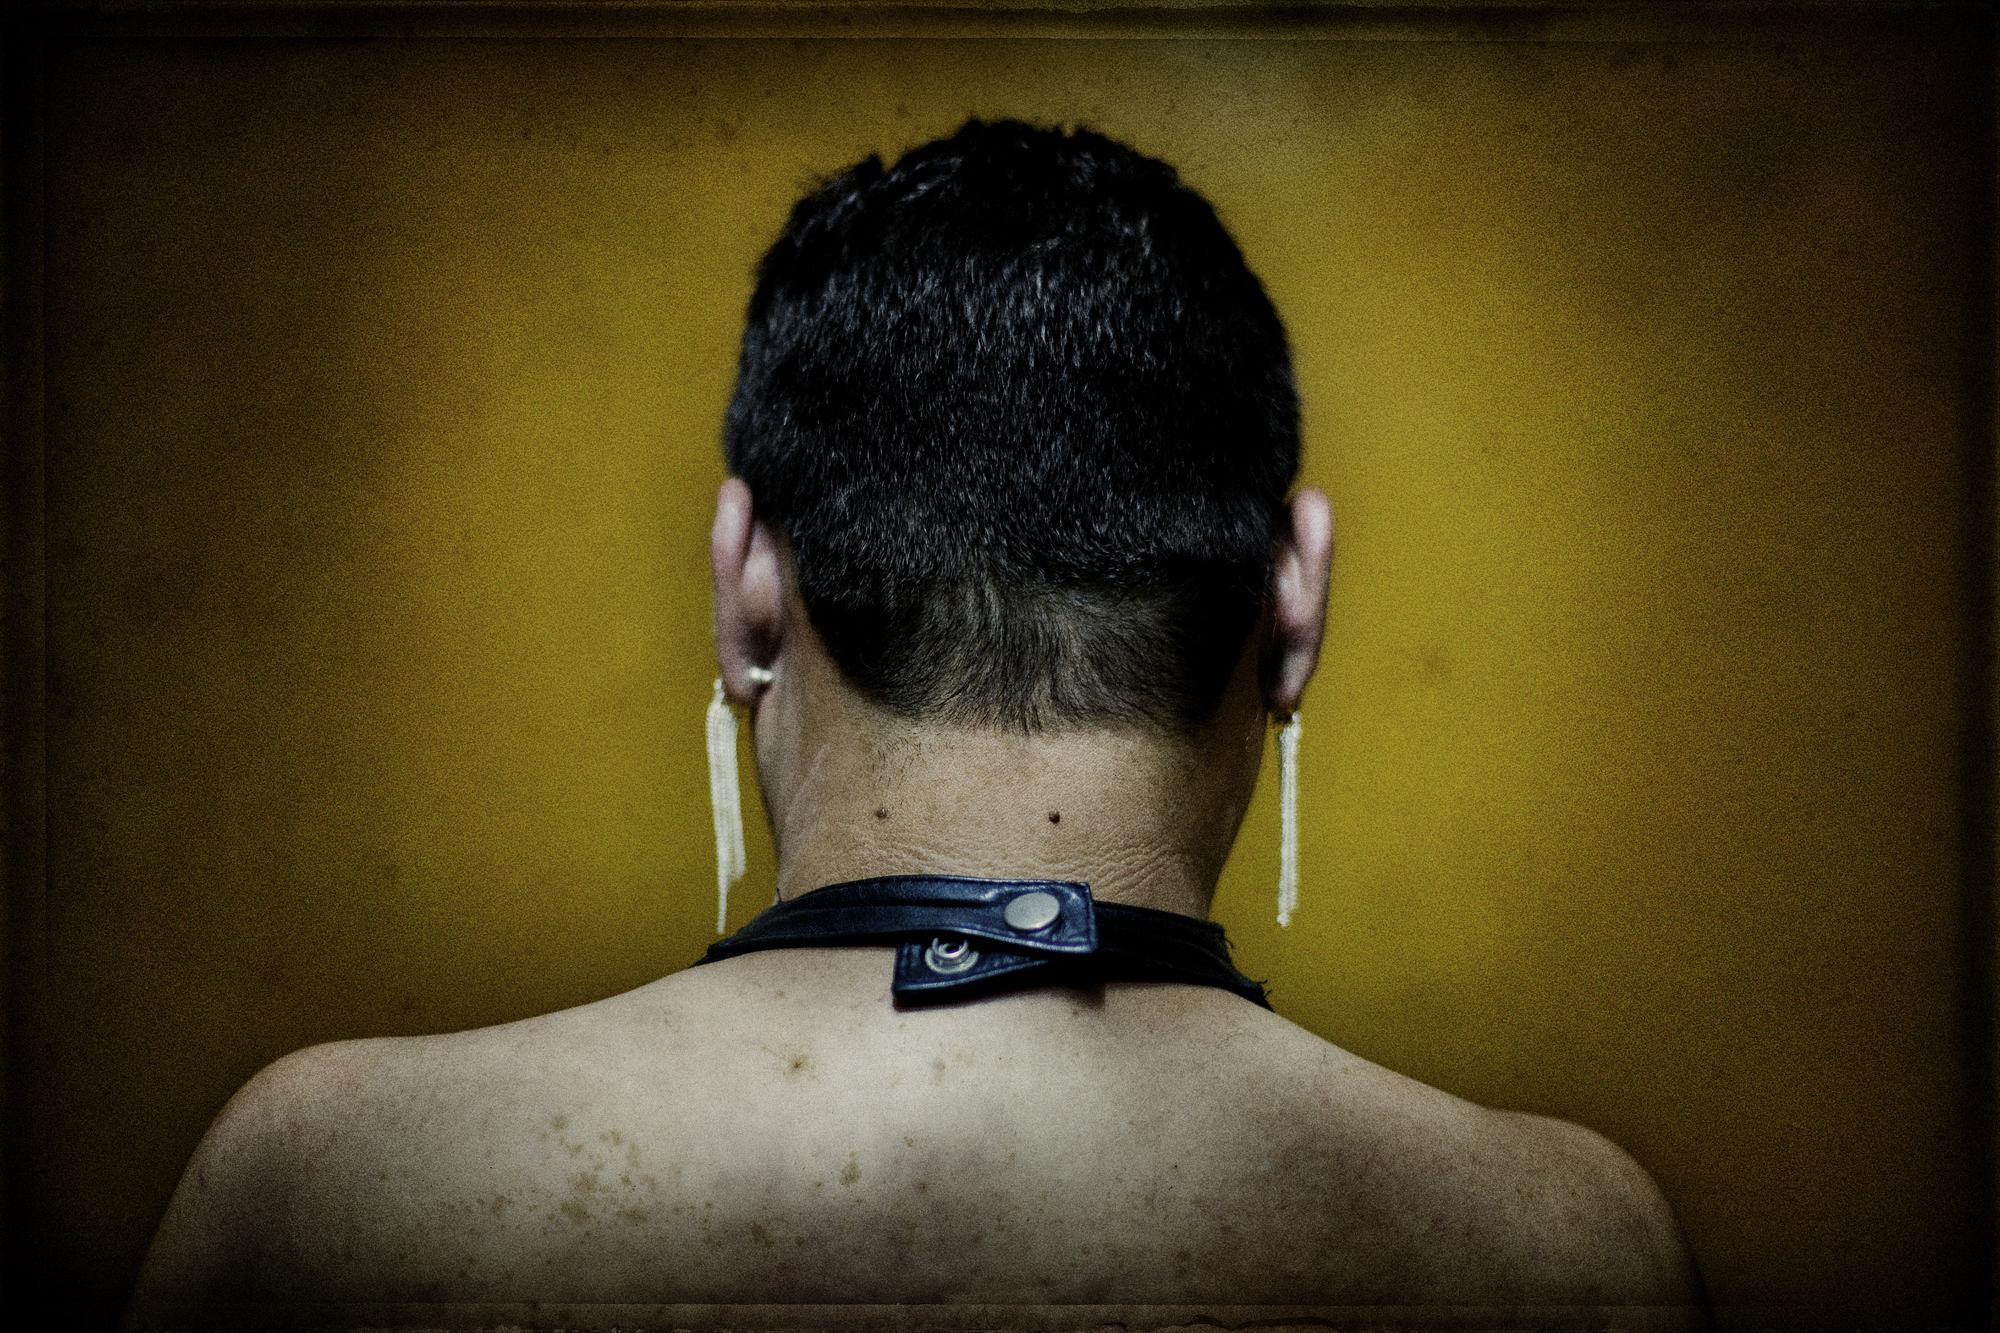 Forced identity - San Pedro Sula, Honduras.
May 2008.
Raul Coto...